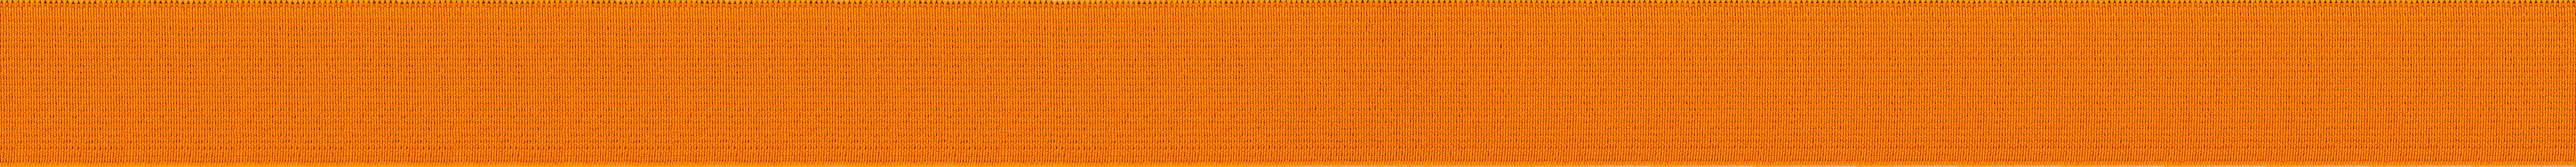 elastic band orange